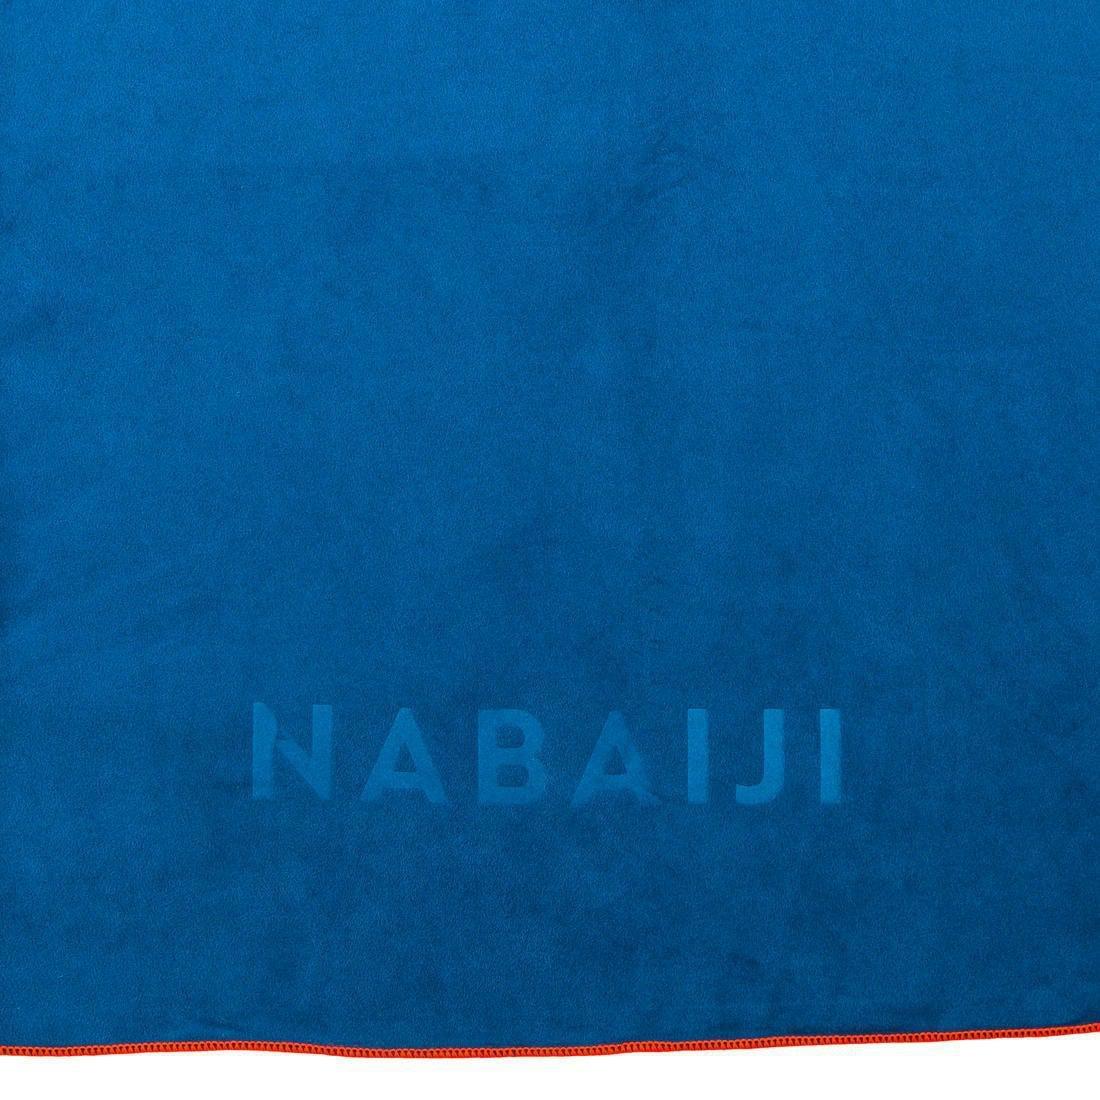 NABAIJI - Microfibre Pool Towel, Jungle Green